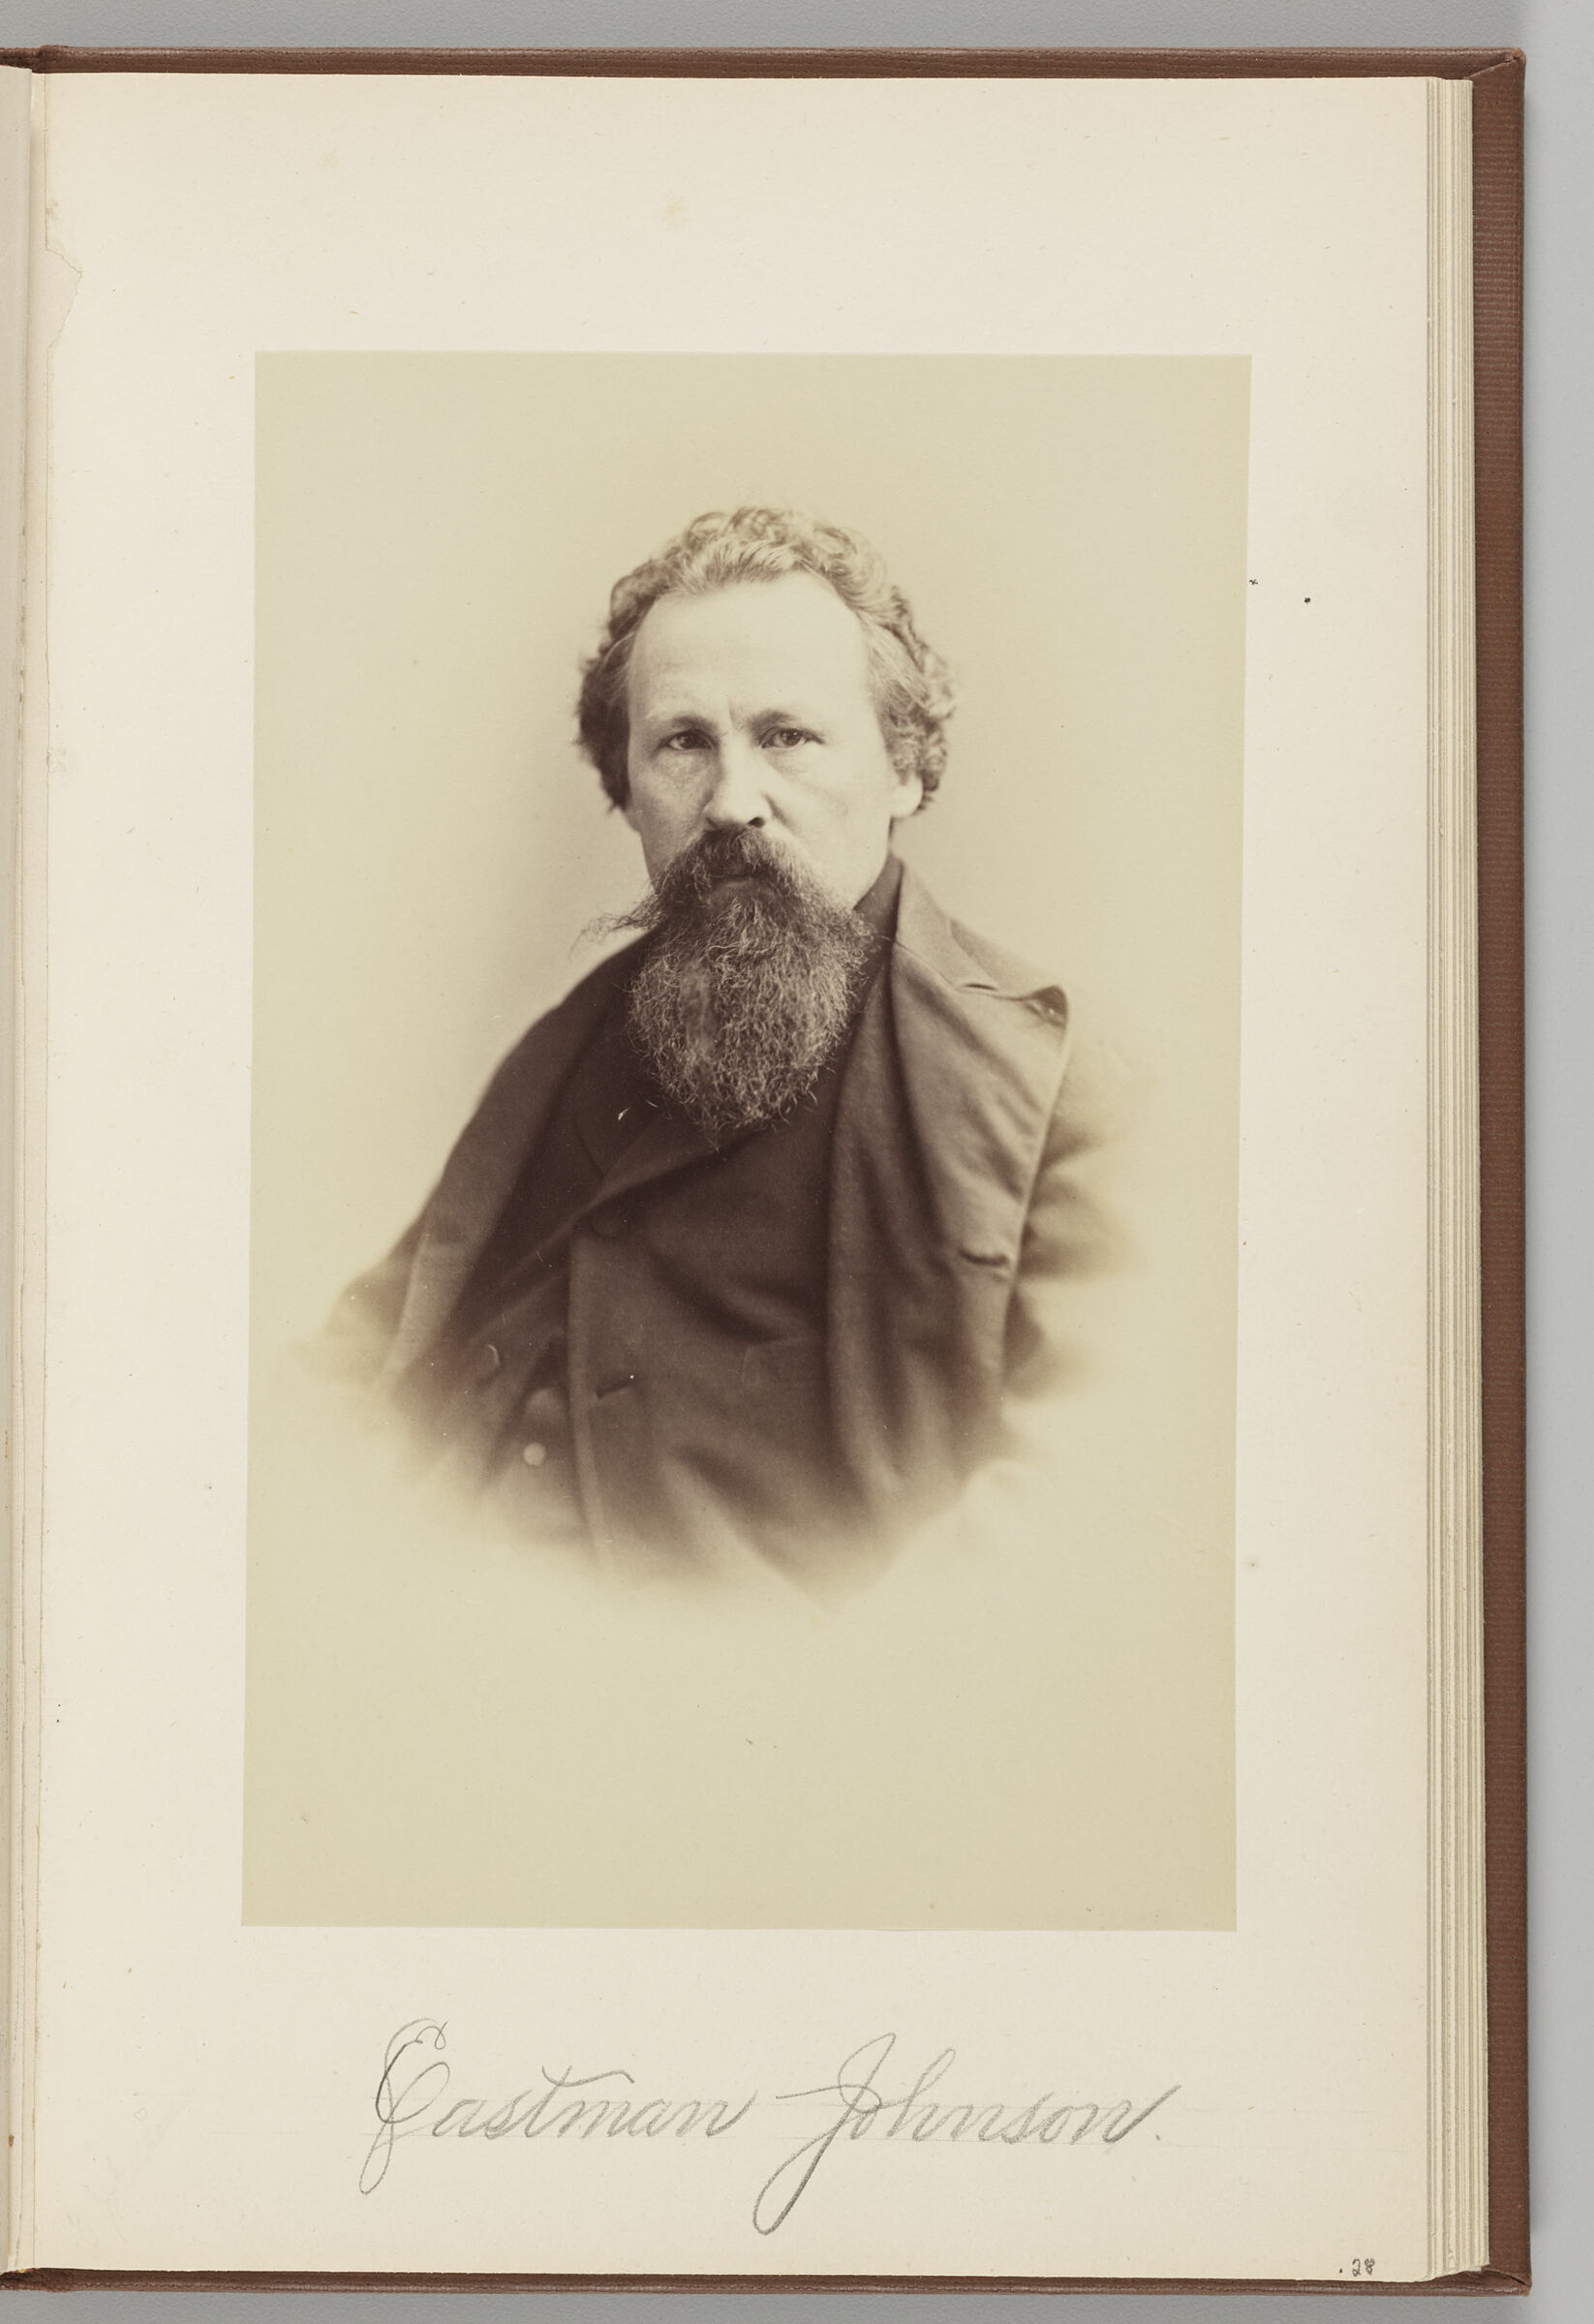 Eastman Johnson (1824-1906)